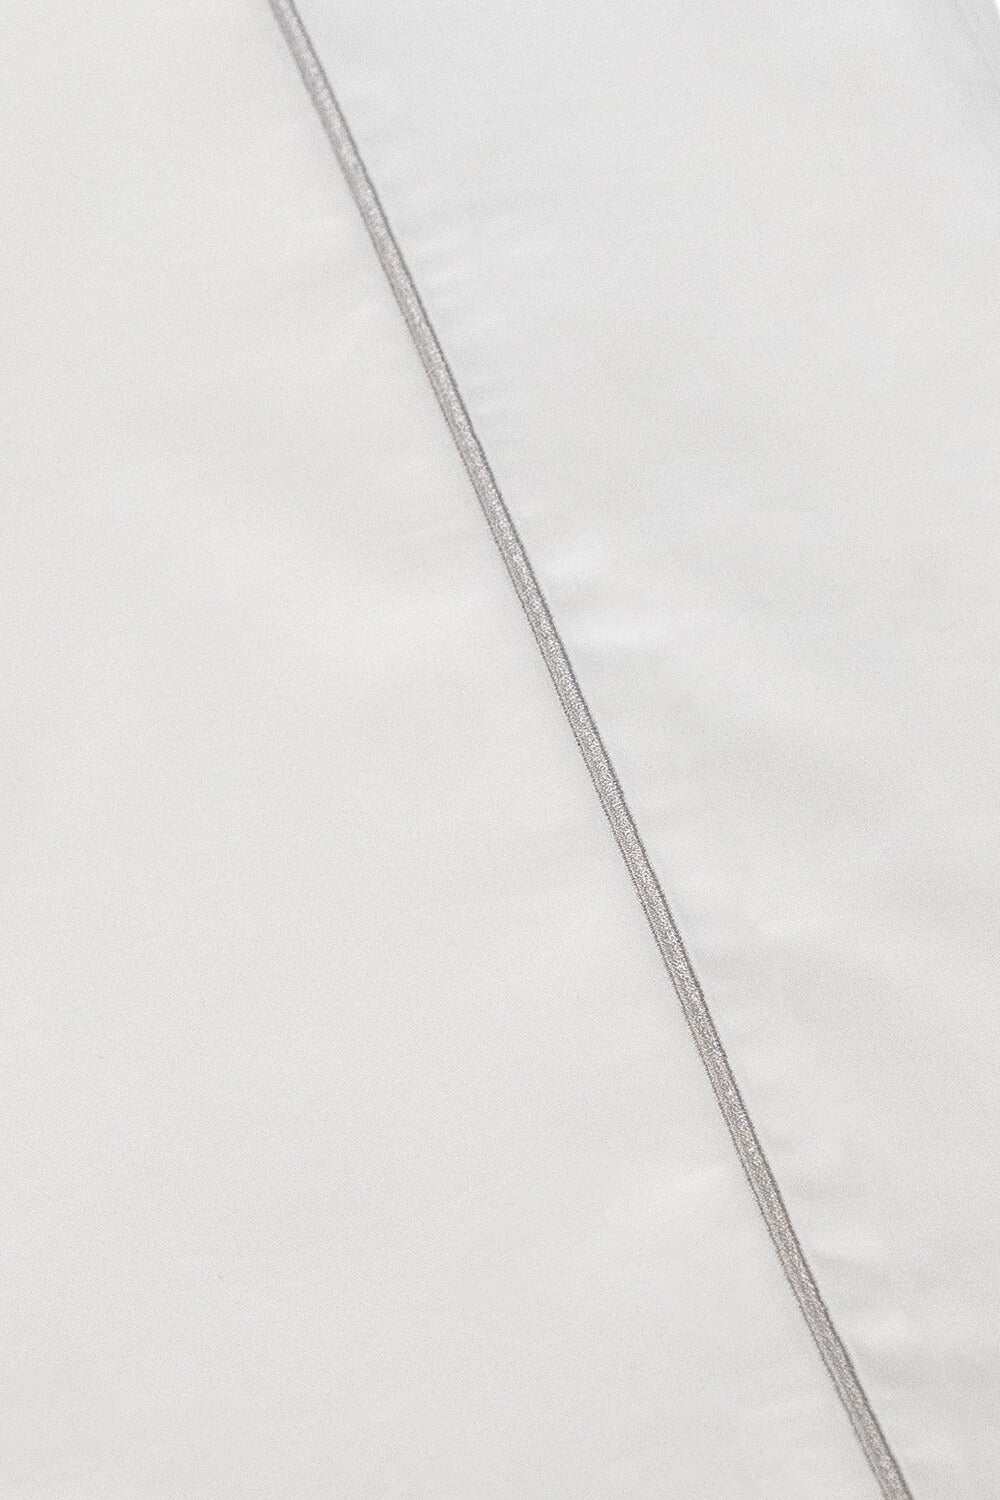 Pack 2 fundas de almohada de algodón Festón blanco para cama de 150 cm